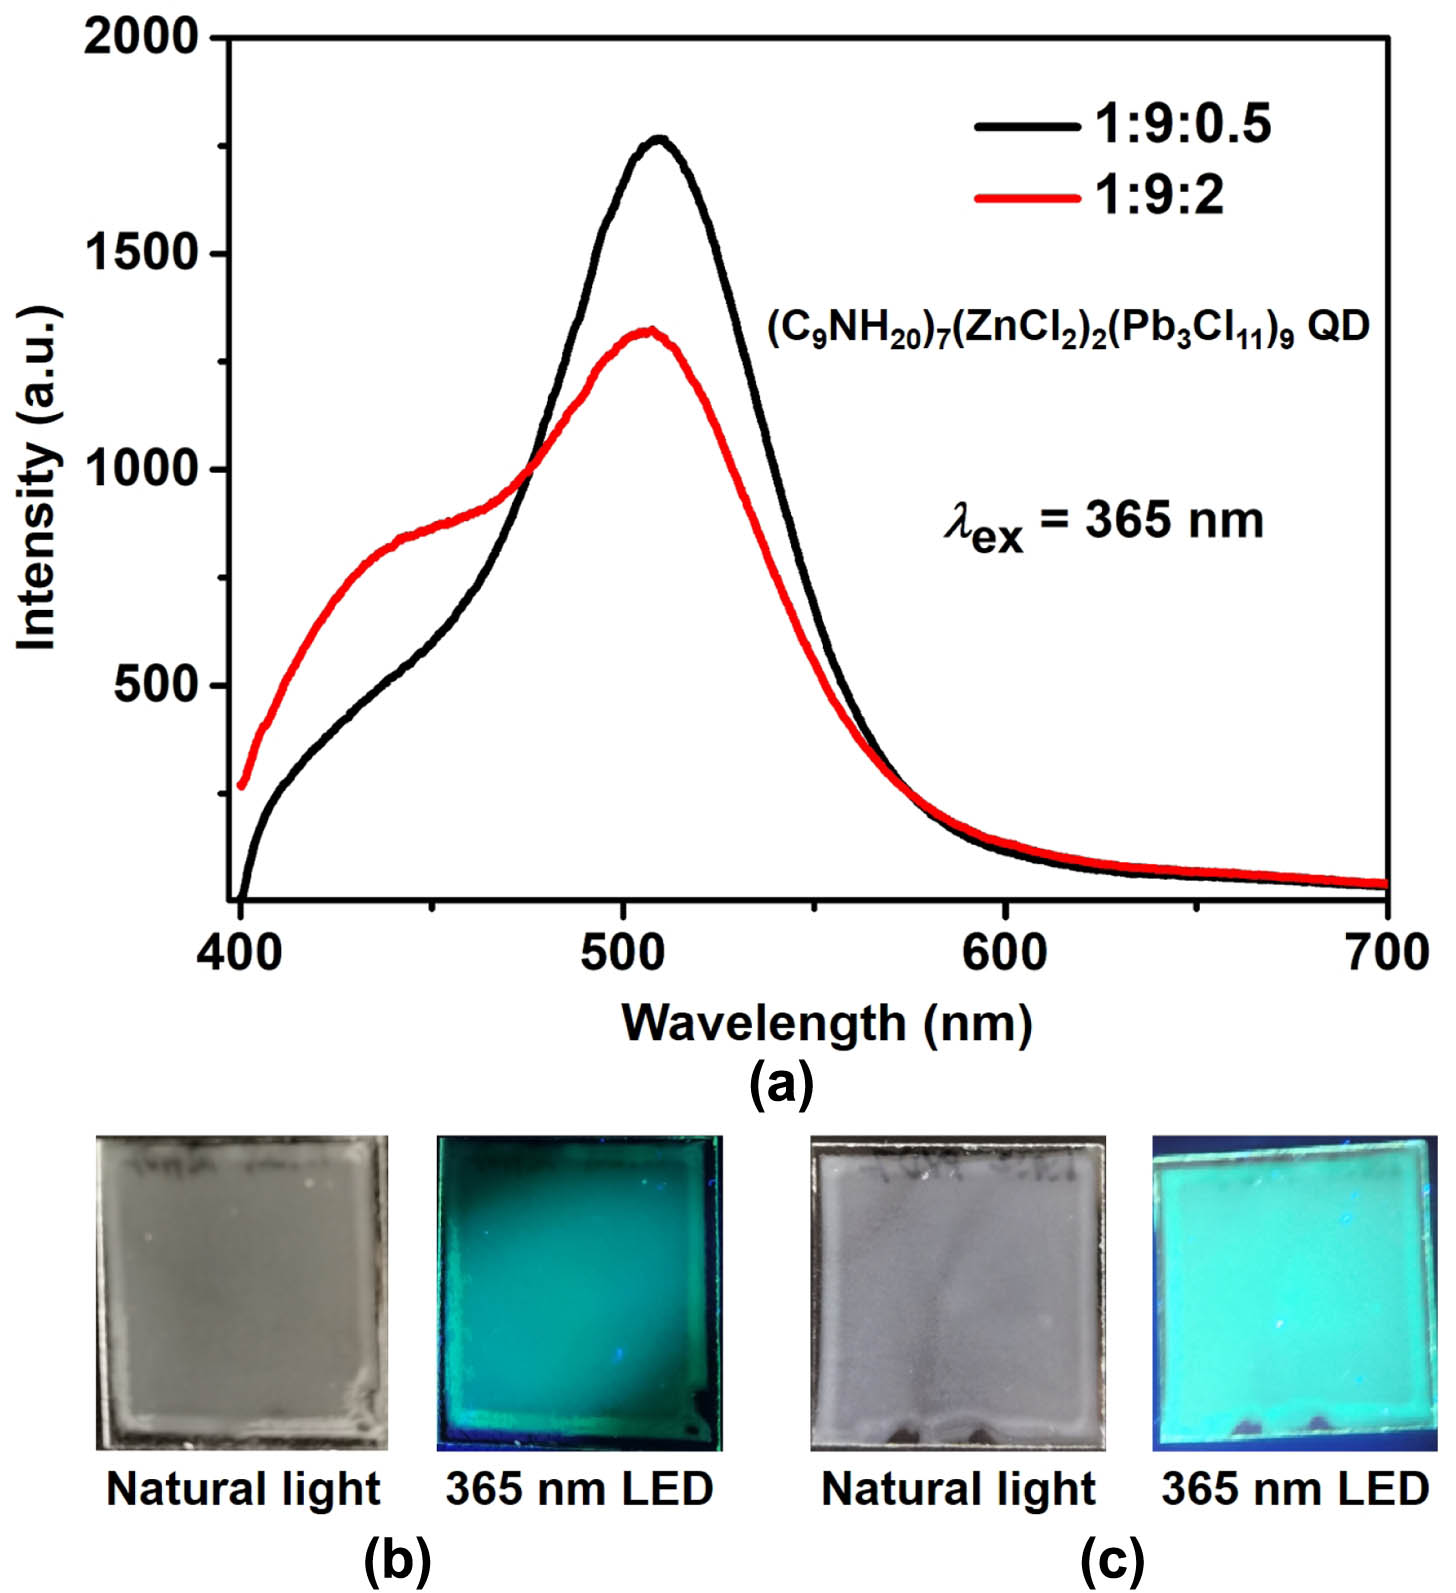 Photoluminescence of (C9NH20)7(ZnCl2)2(Pb3Cl11)9 QD film. (a) Photoluminescence emission spectra. 1:9:2 and 1:9:0.5 are the molar ratios of perovskite quantum dot components. (b), (c) Comparison of 1:9:2 (b) and 1:9:0.5 (c) quantum dot films under sunlight and UV light irradiation.